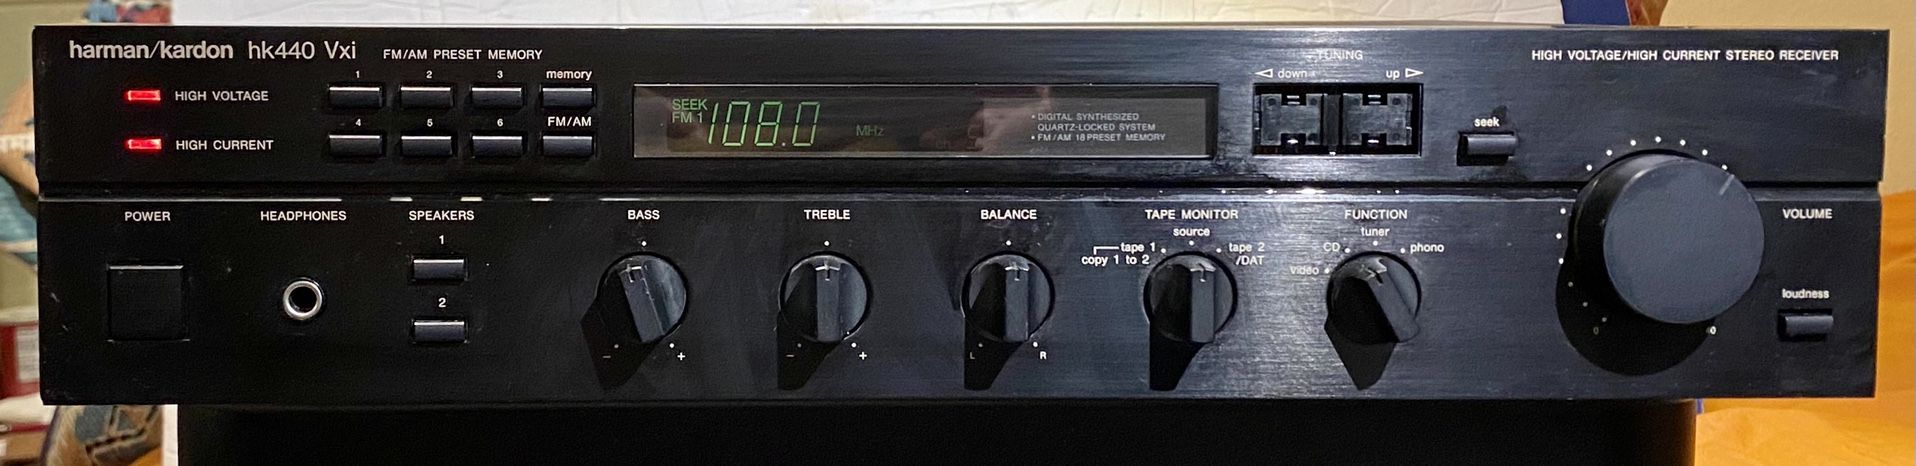 Harman Kardon hk440 Vxi vintage stereo receiver